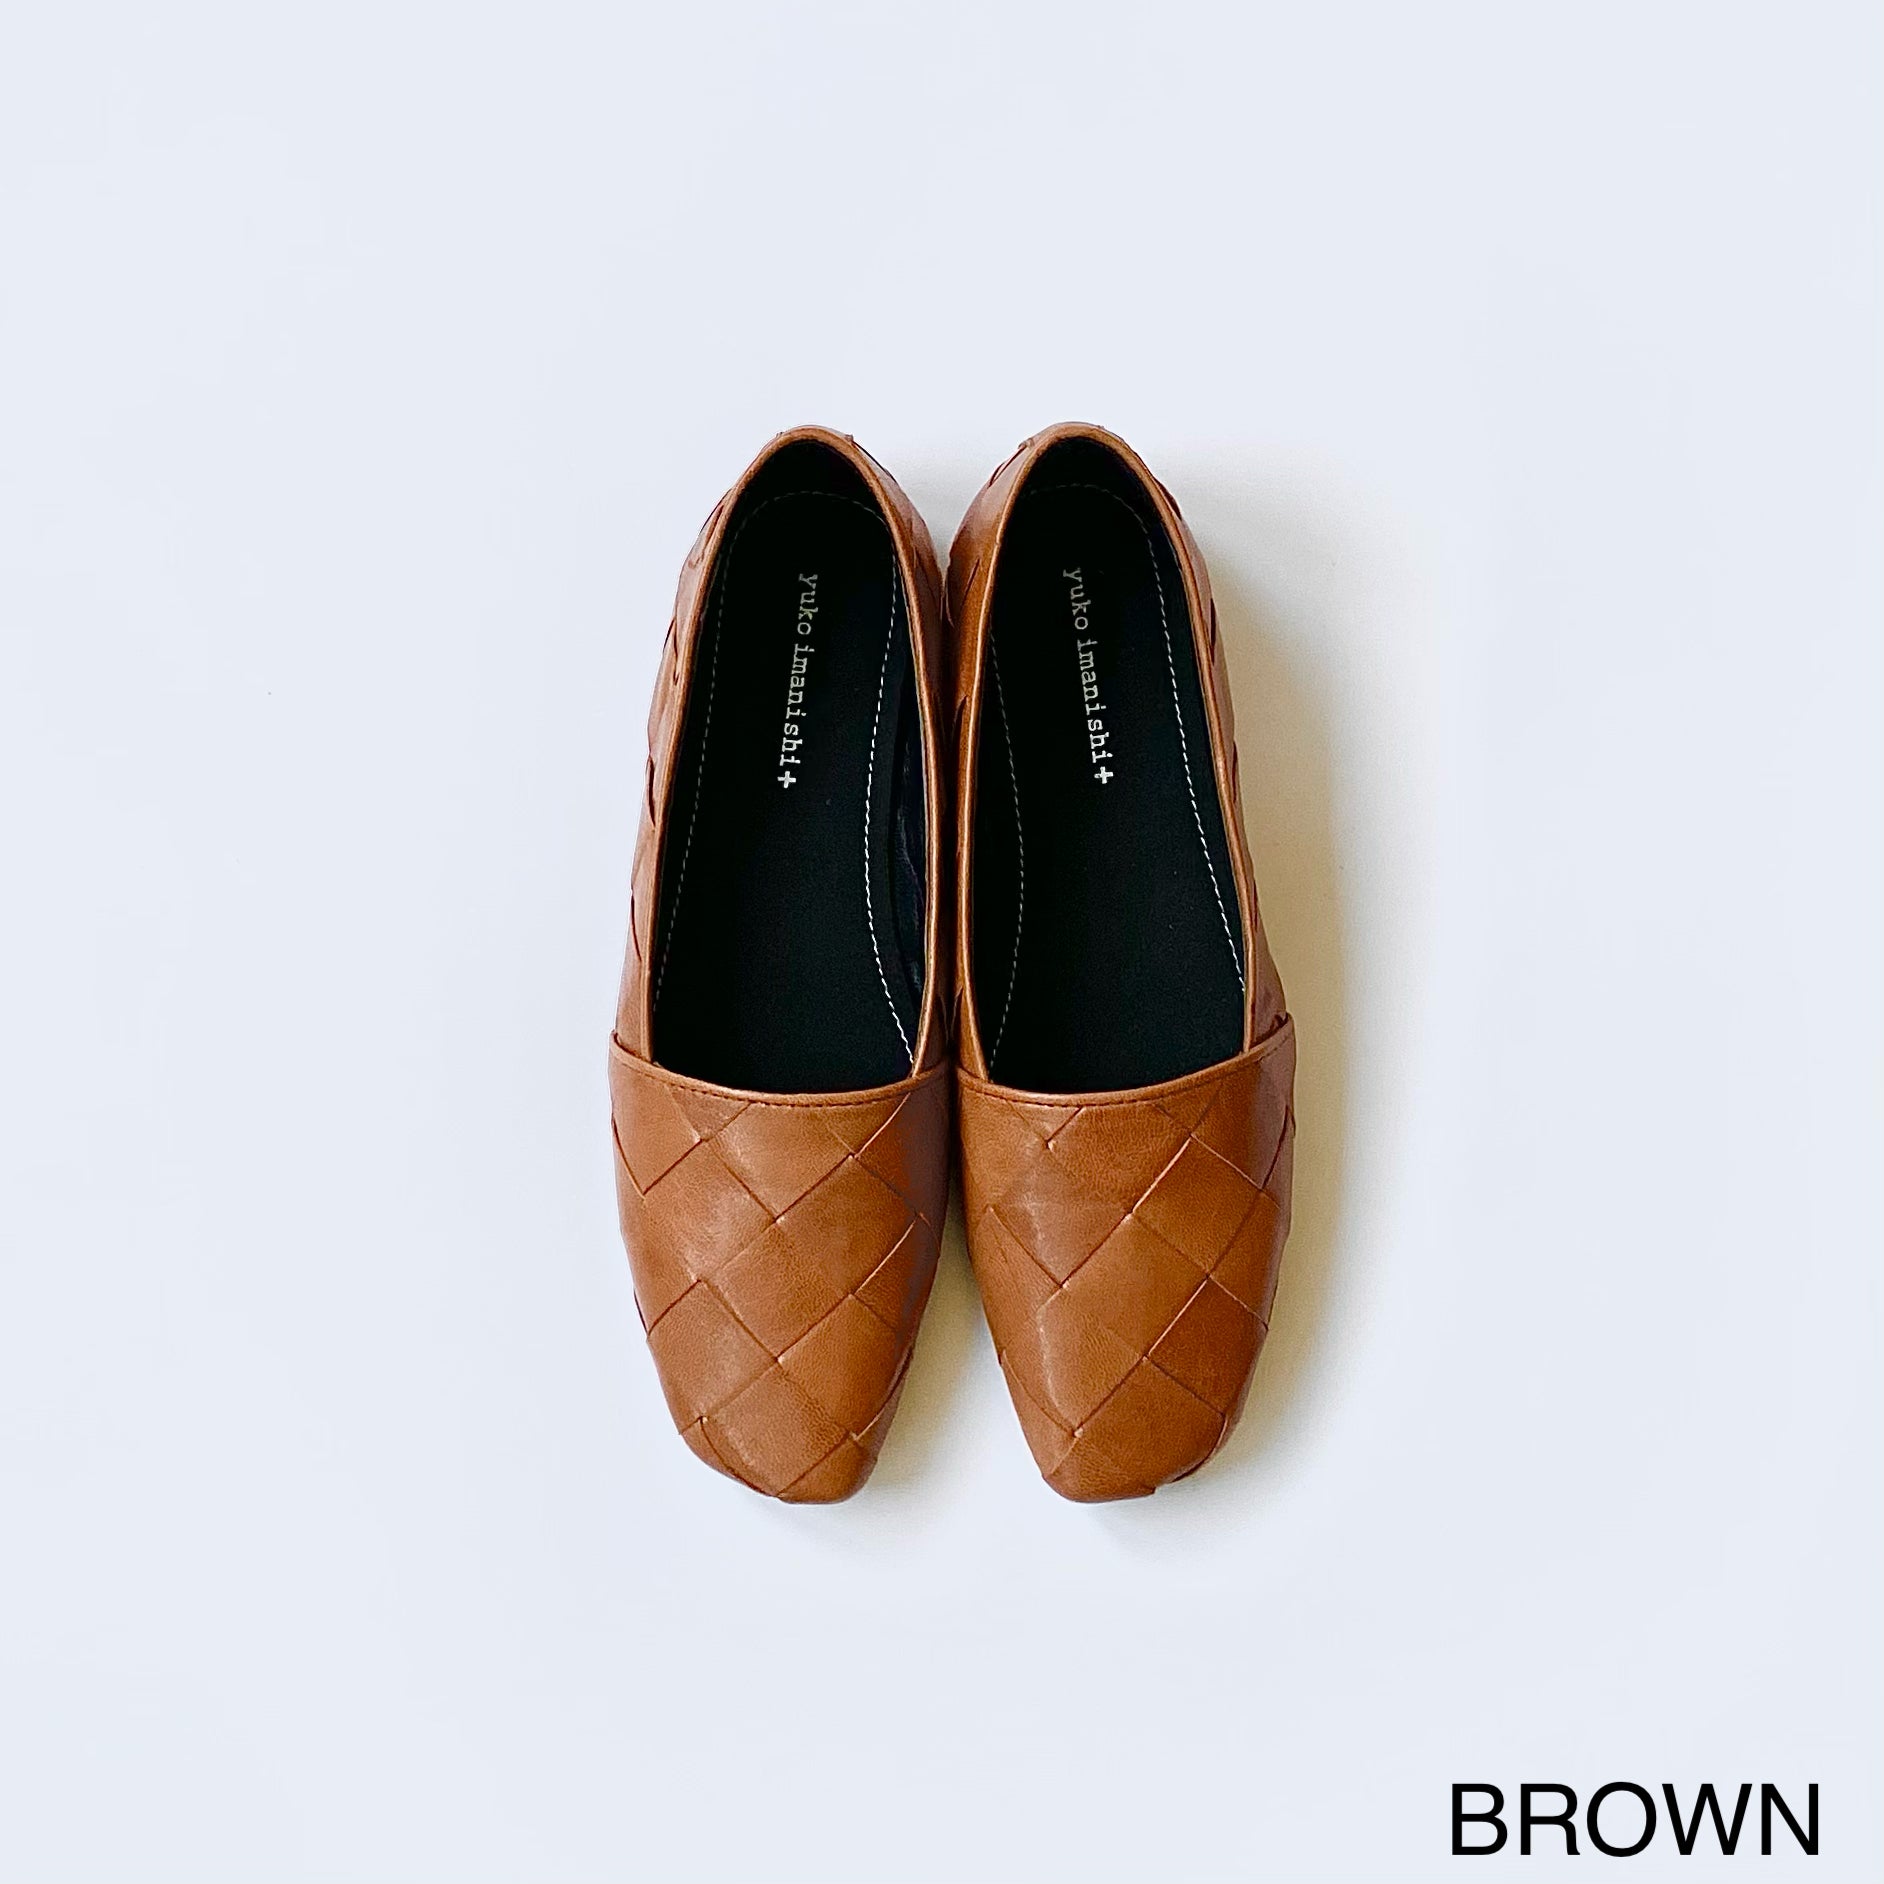 BROWN / 35 (22.2cm)